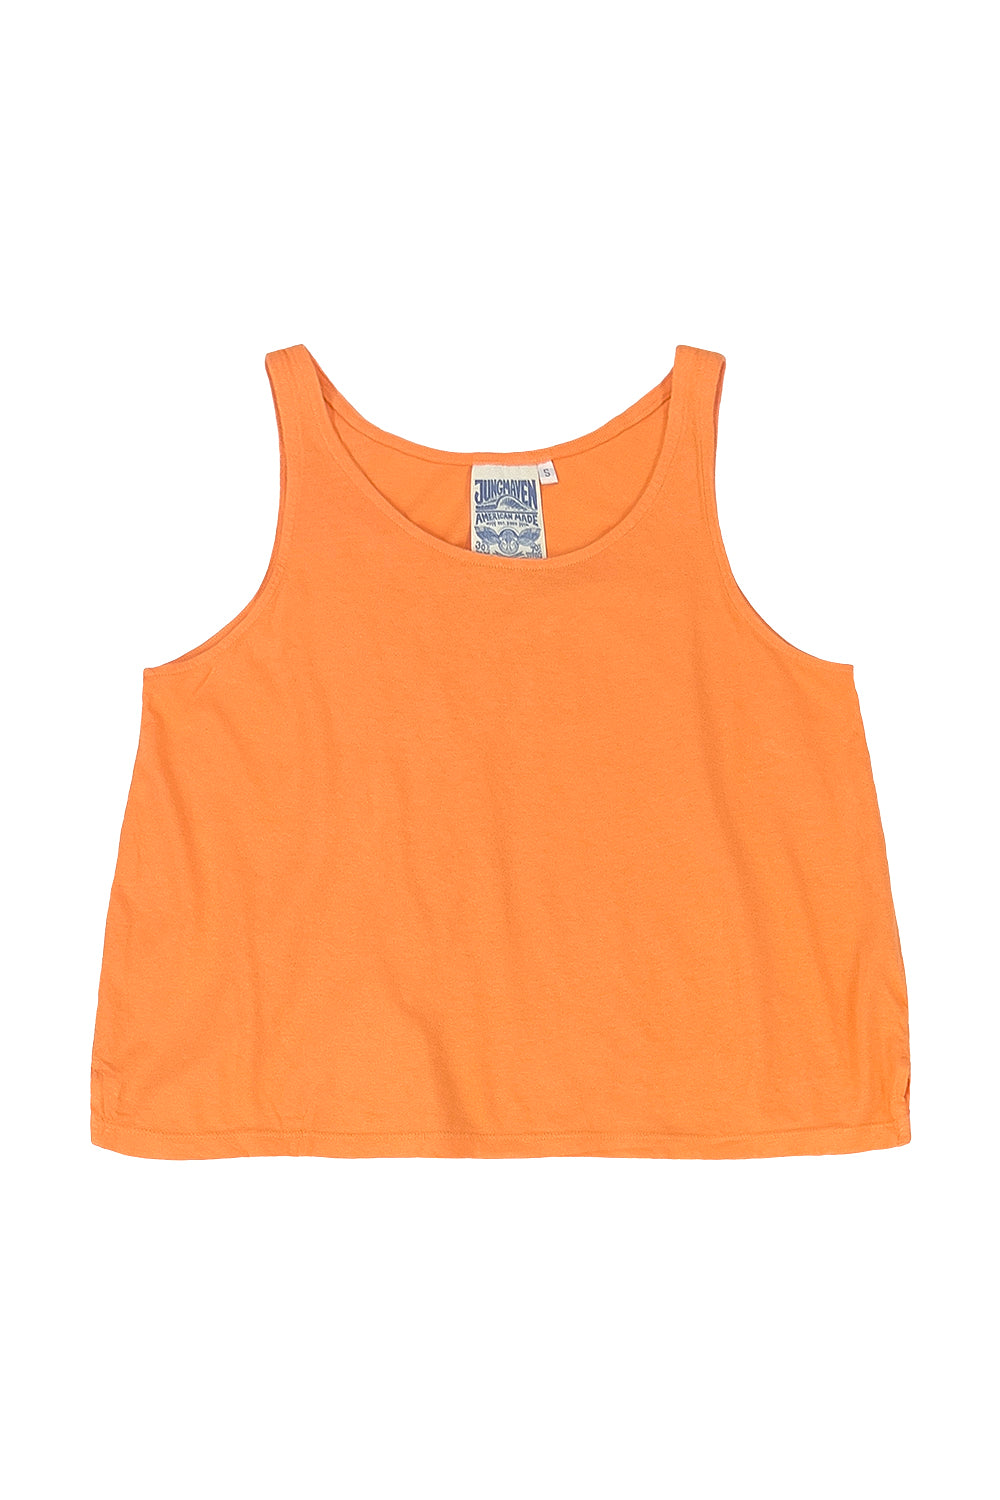 Trinity Tank | Jungmaven Hemp Clothing & Accessories / Color: Apricot Crush